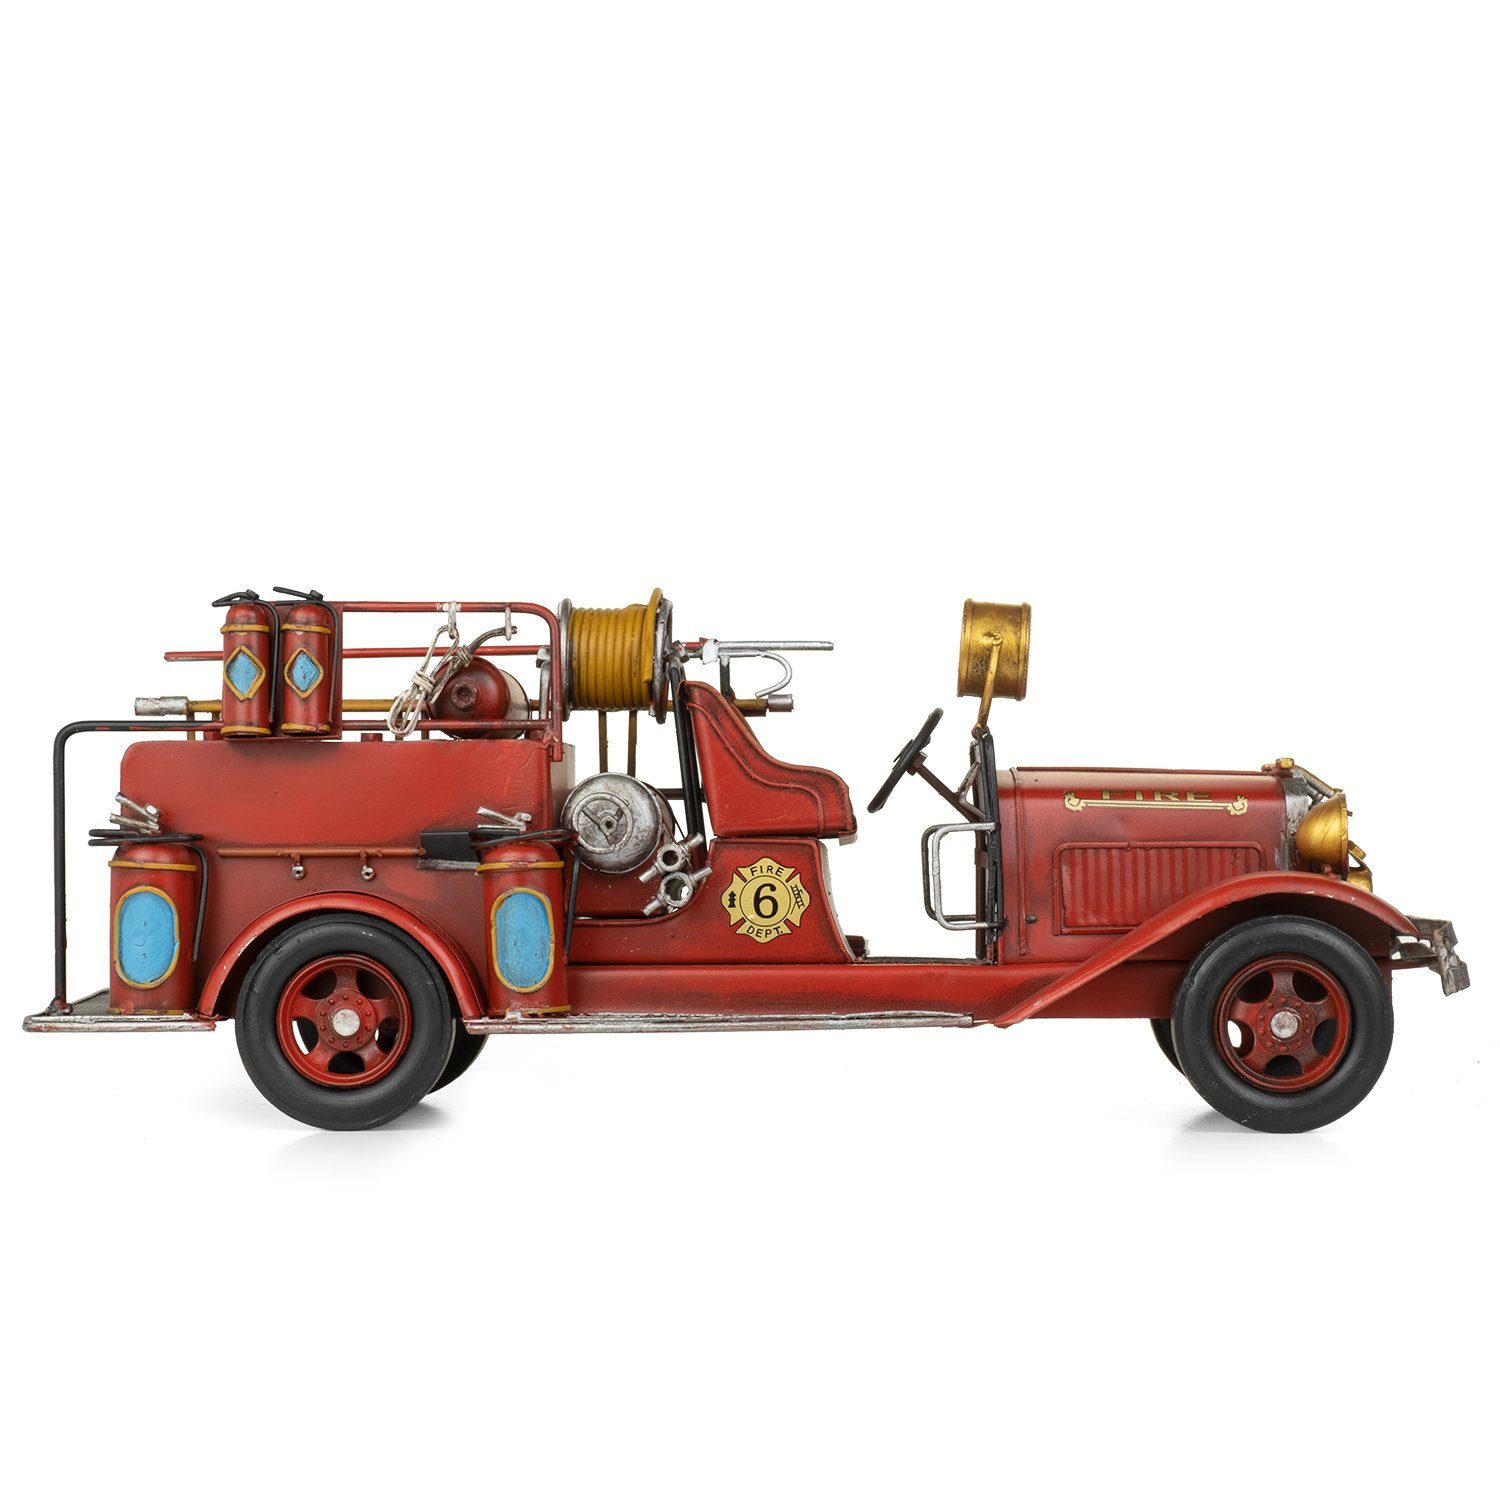 Feuerwehrwagen Nostalgie Blech-Deko Nachbildung Antik-Stil Nr. 6, Dekoobjekt Moritz Oldtimer Retro Blechmodell Auto Modell Miniatur